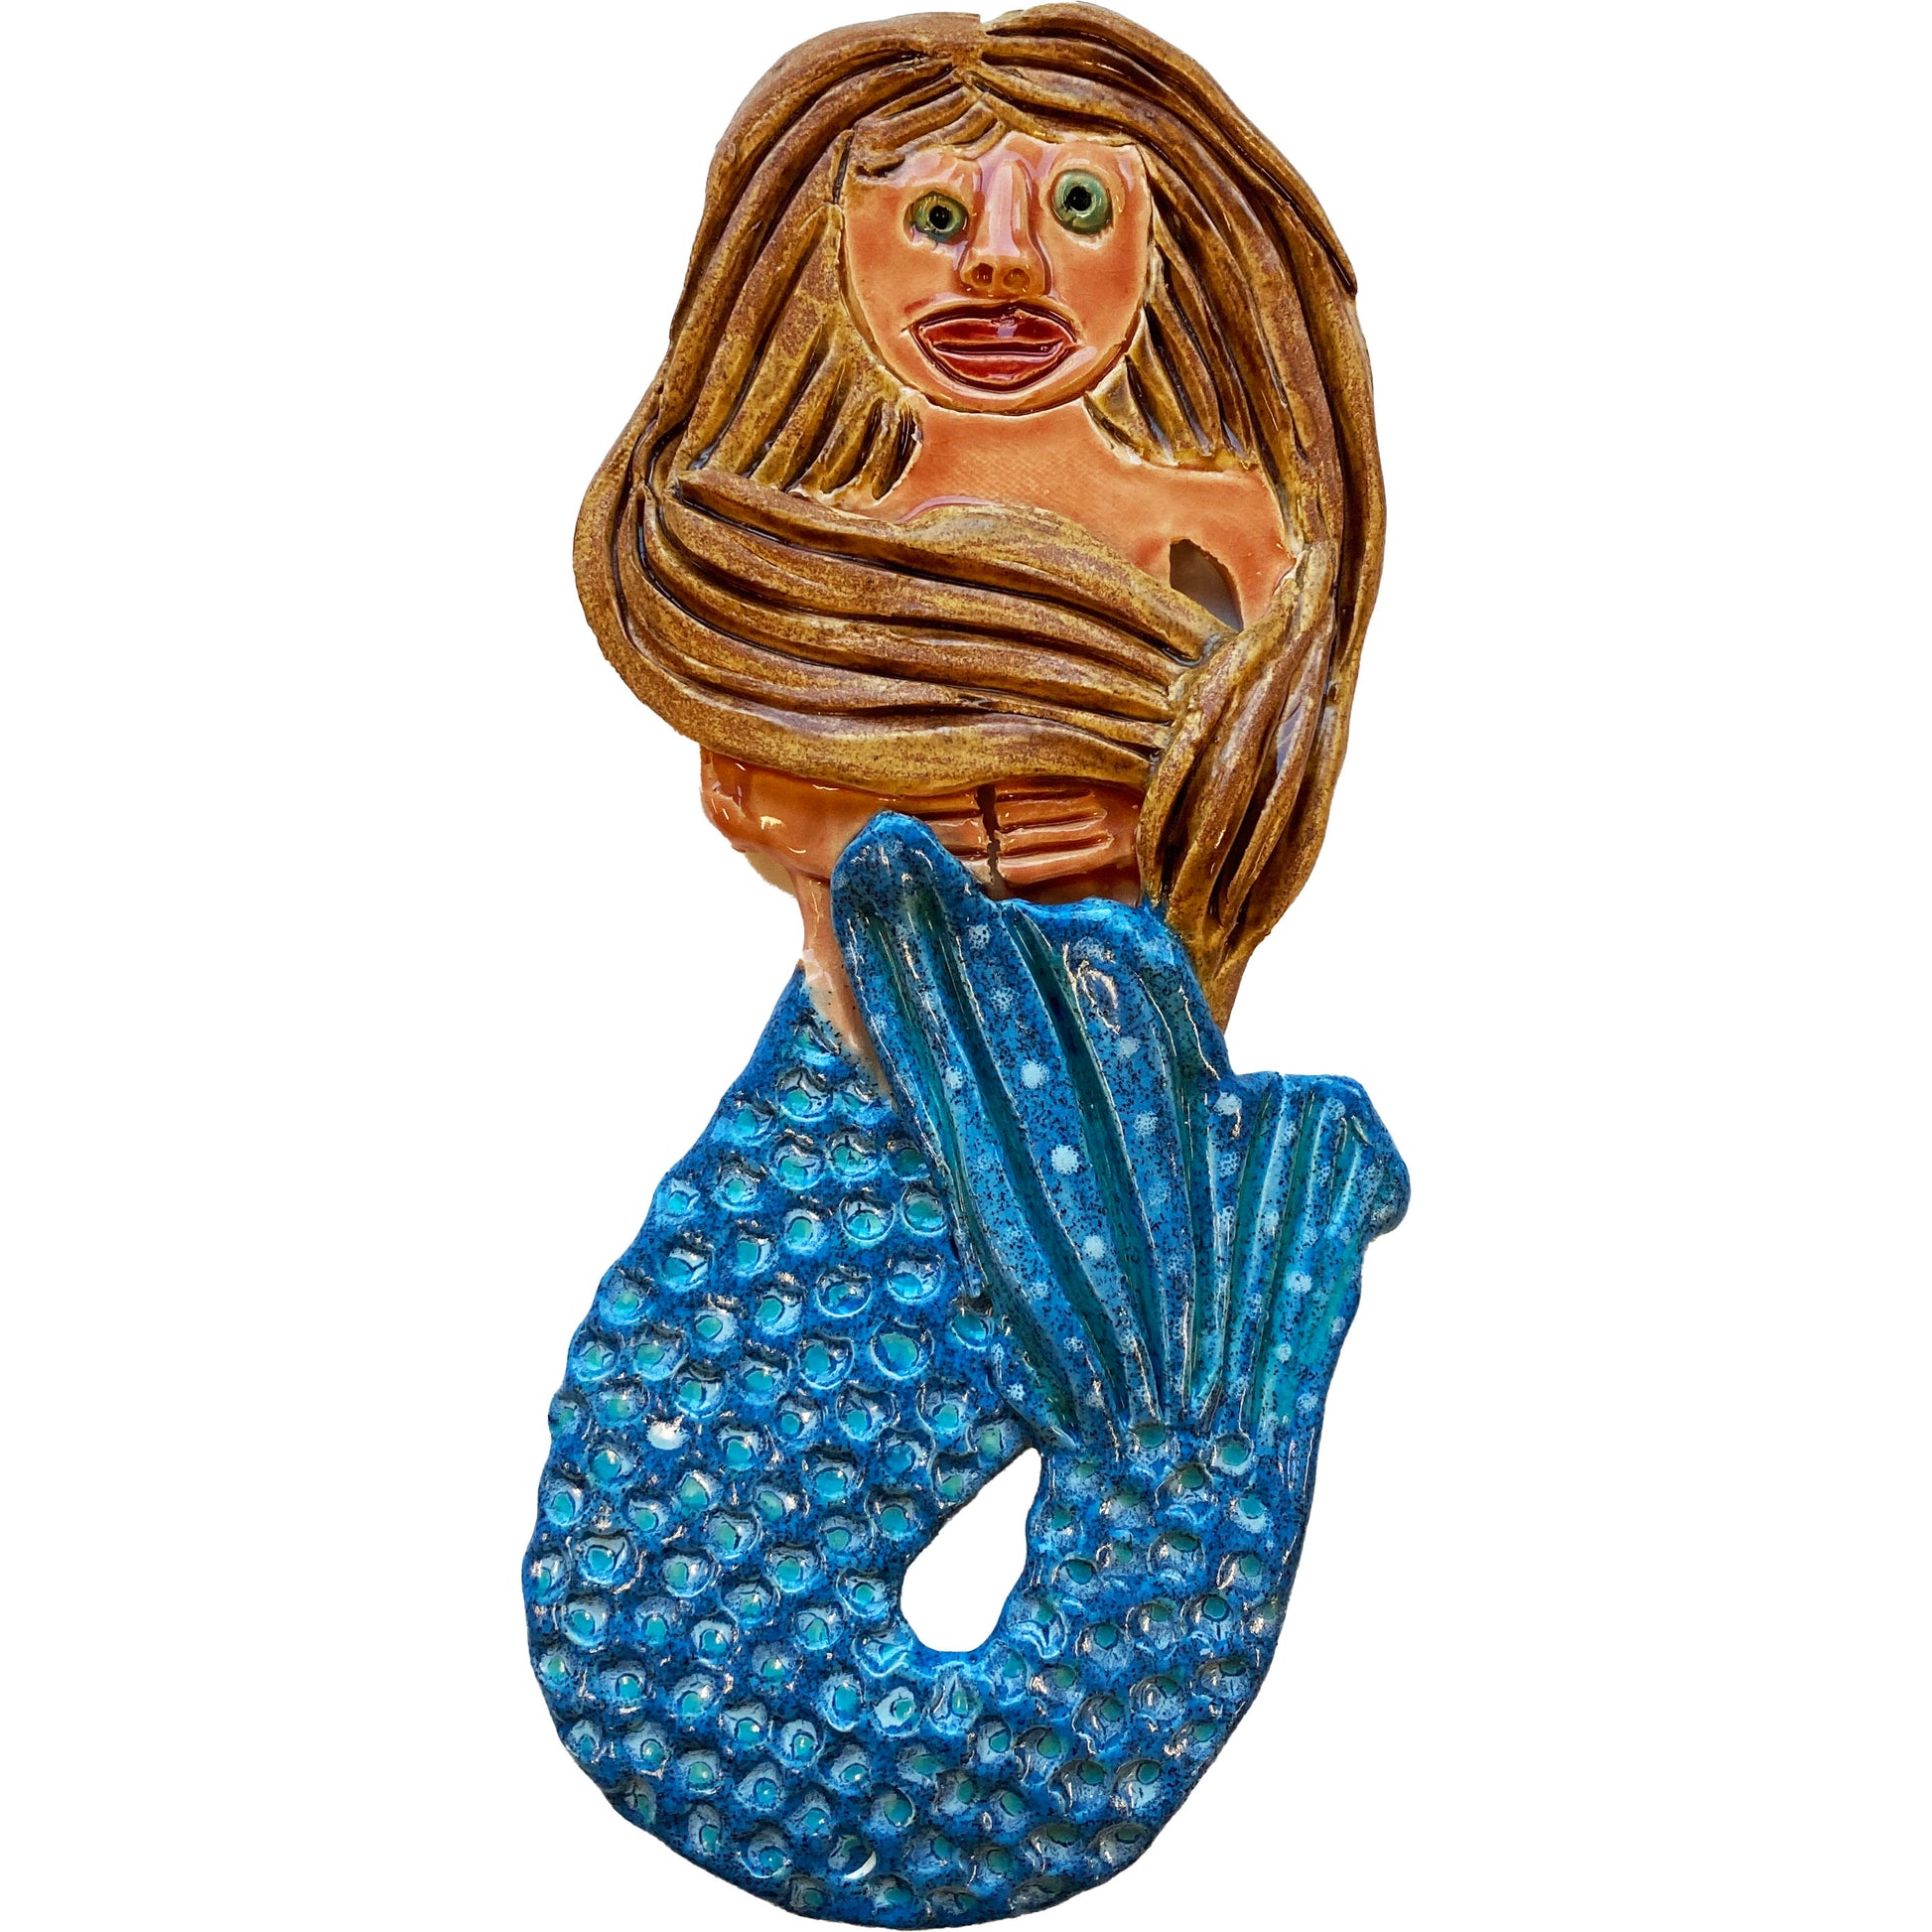 WATCH Resources Art Guild - Ceramic Arts Handmade Clay Crafts Fresh Fish 12.5-inch x 5.5-inch Glazed Mermaid by Lisa Uptain